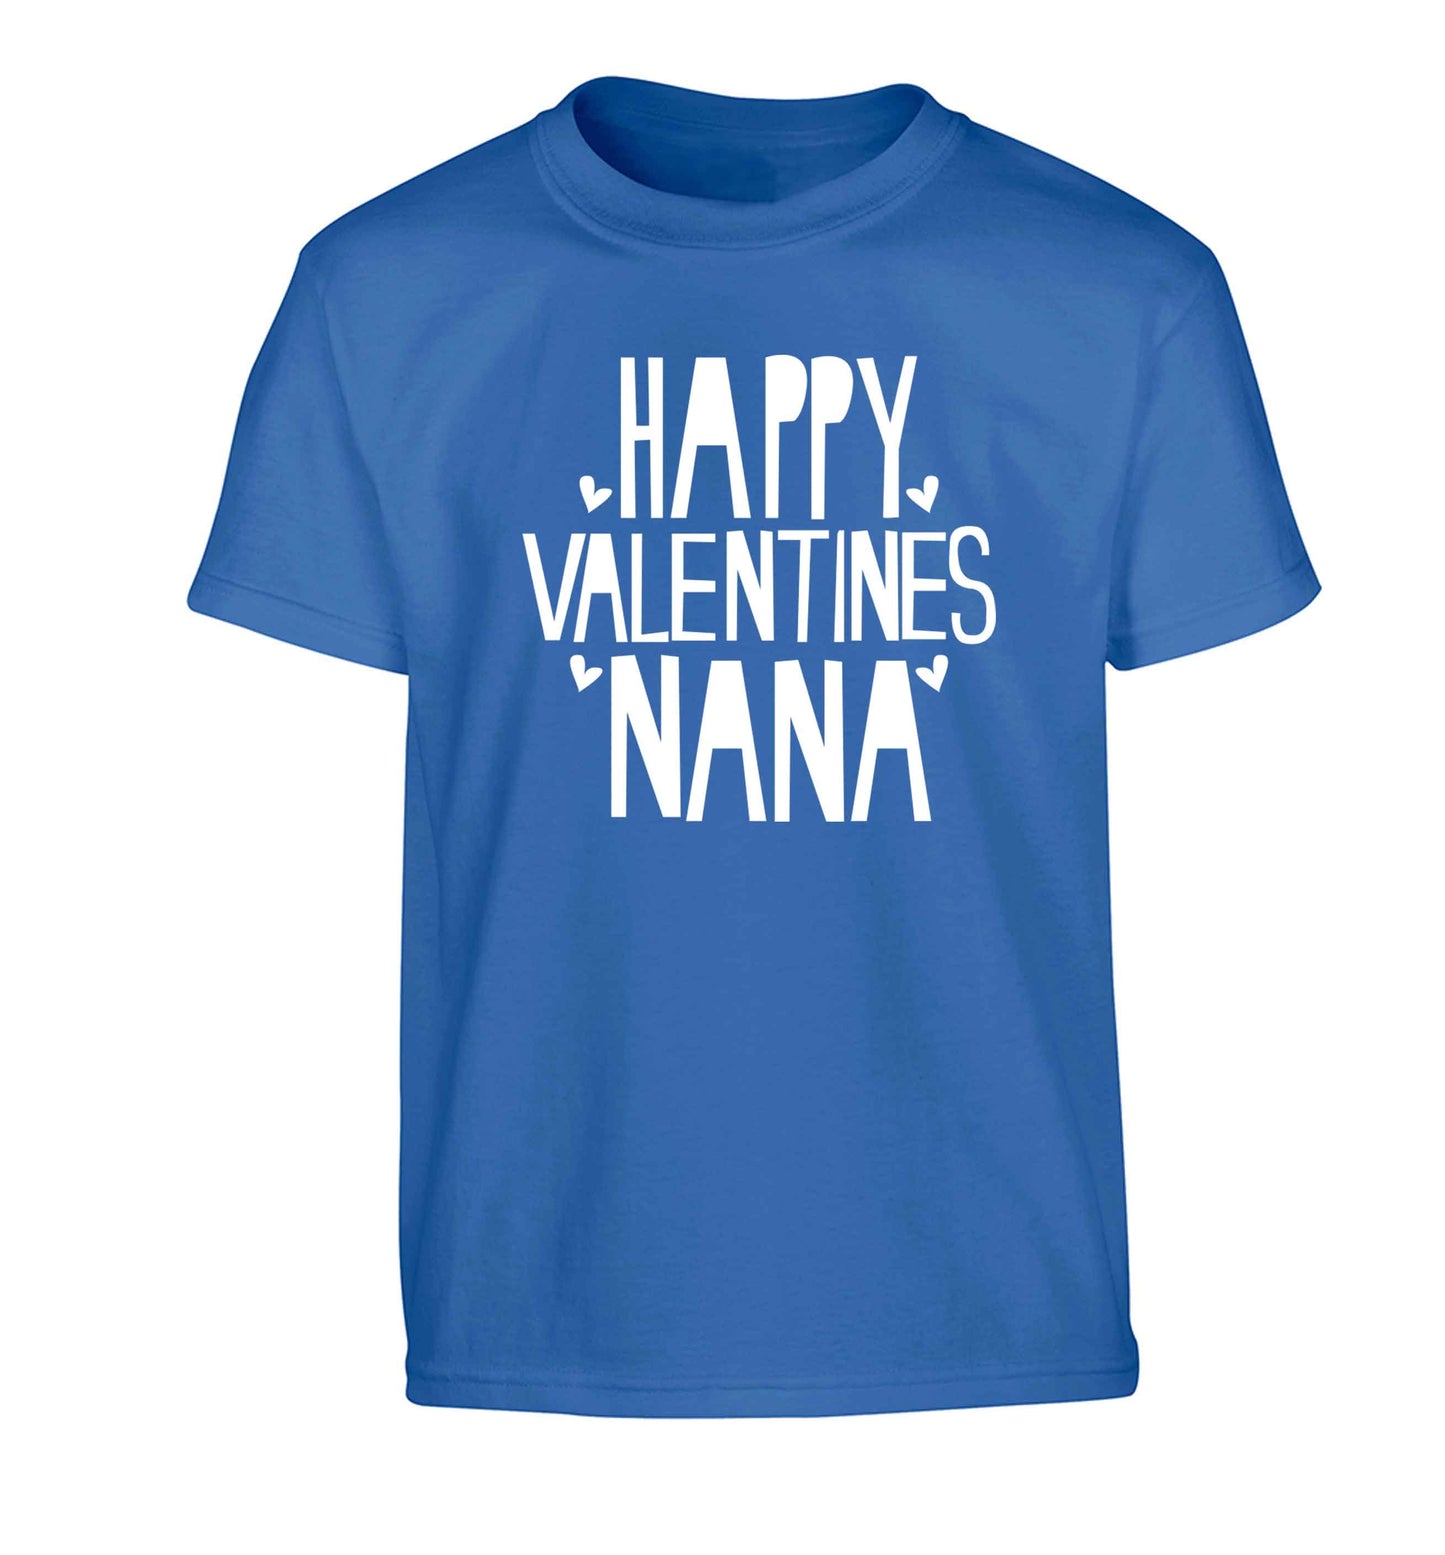 Happy valentines nana Children's blue Tshirt 12-13 Years